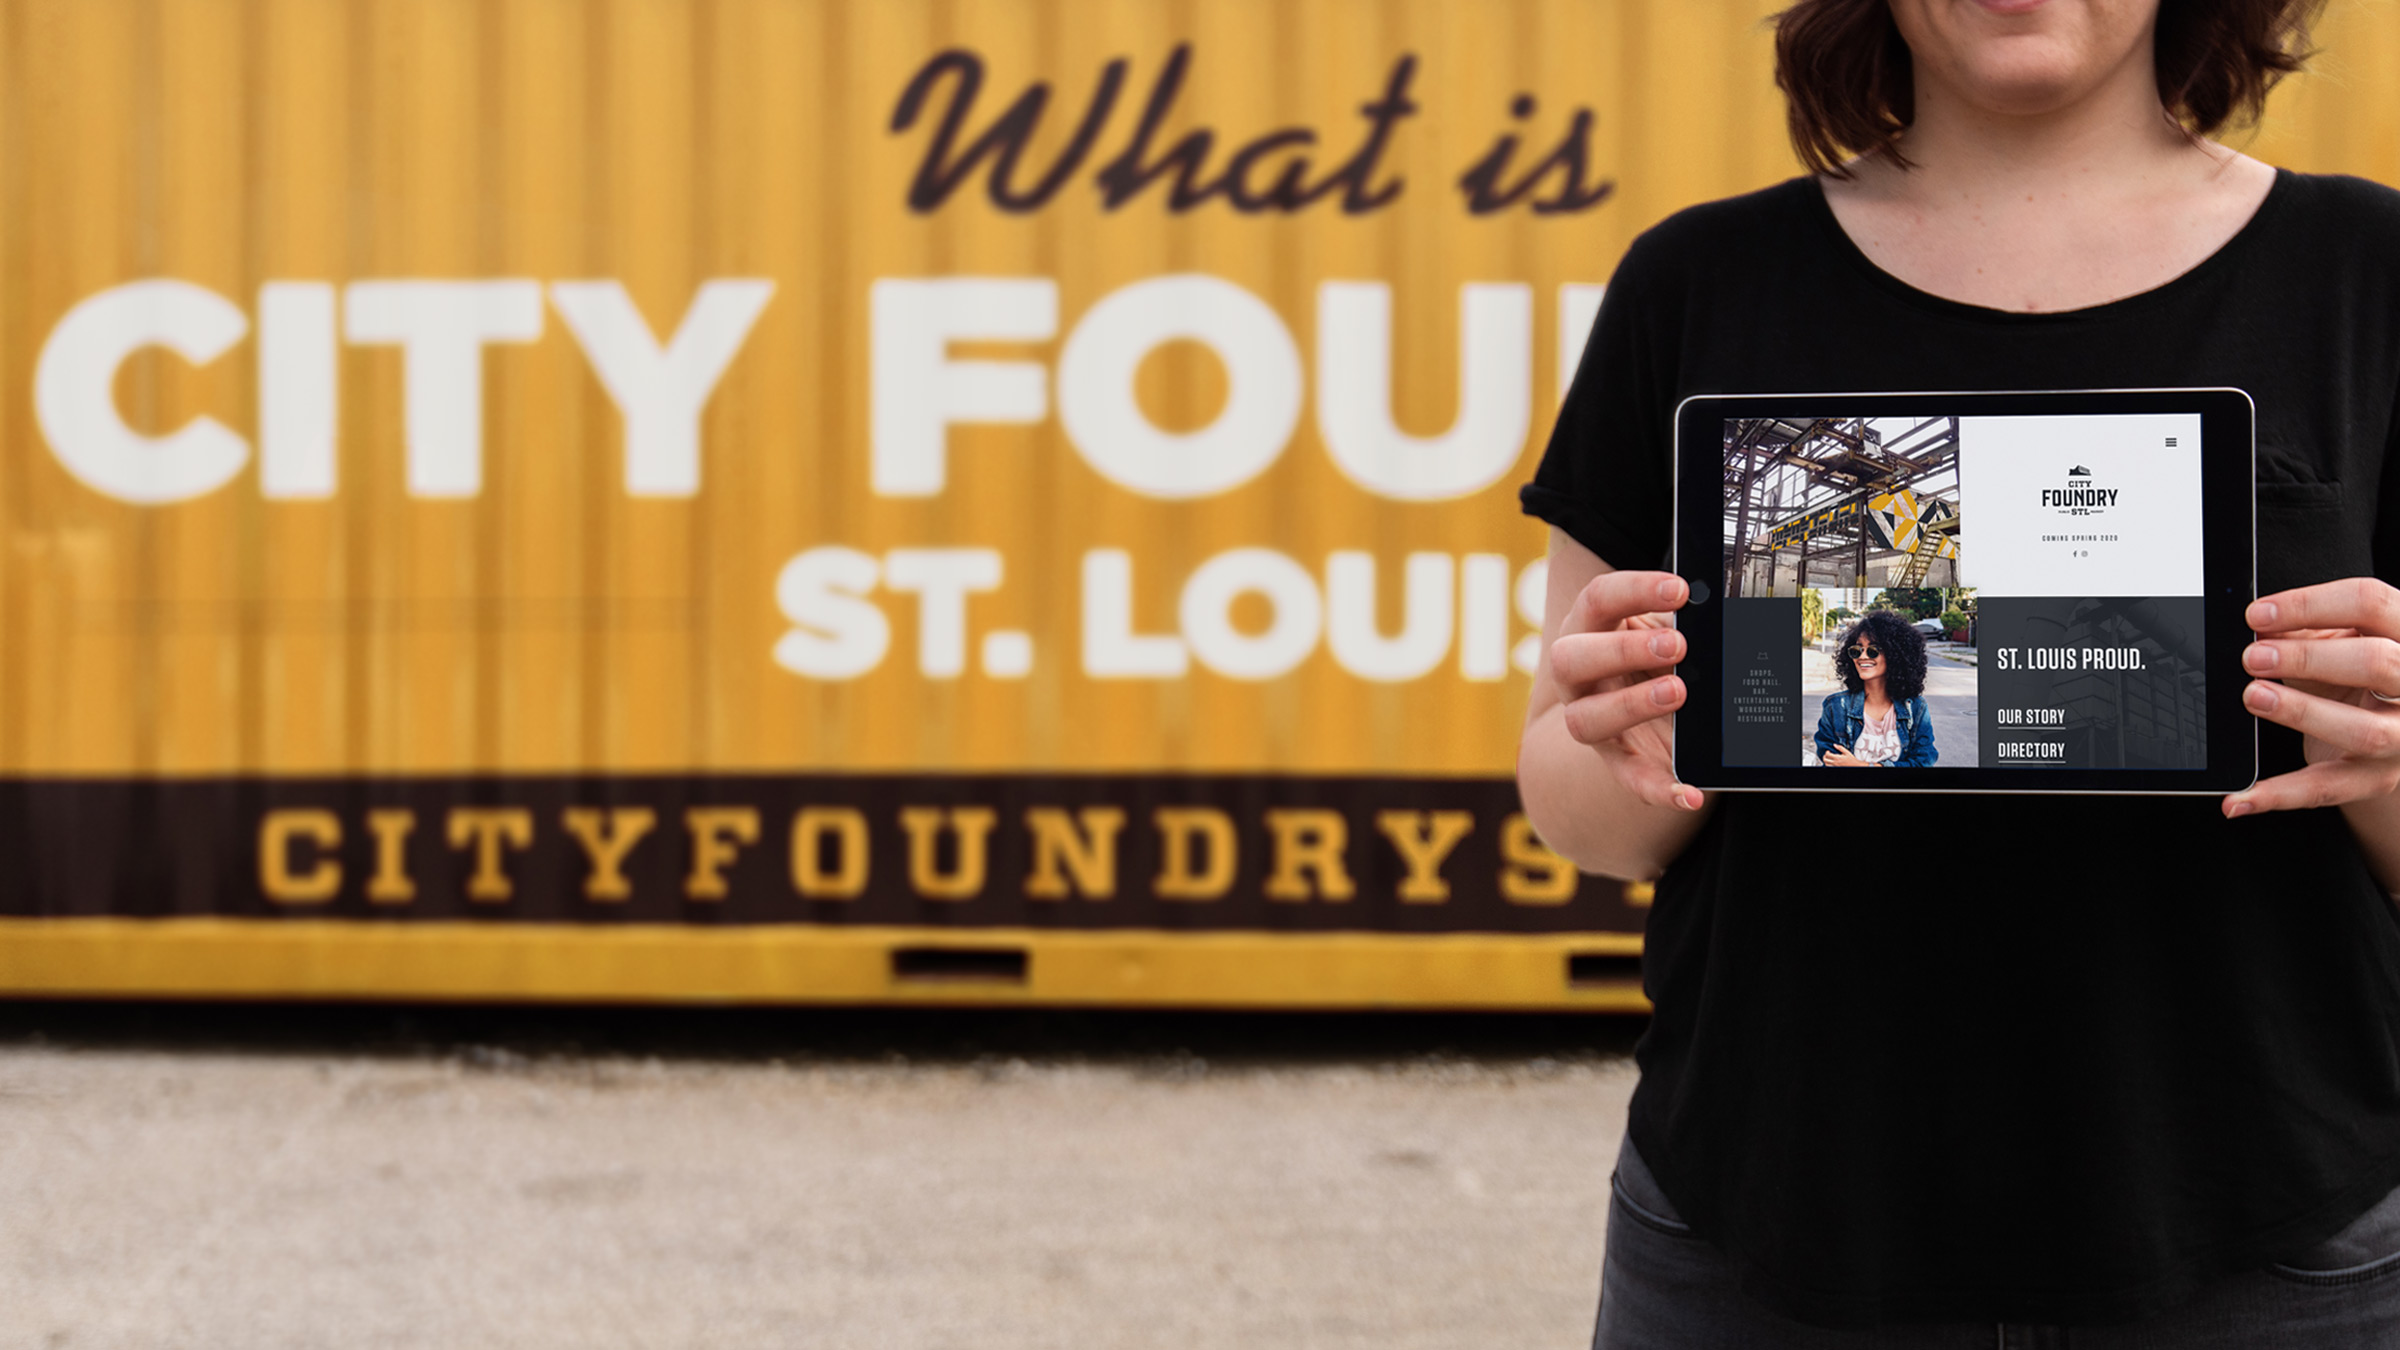 City Foundry St. Louis Website